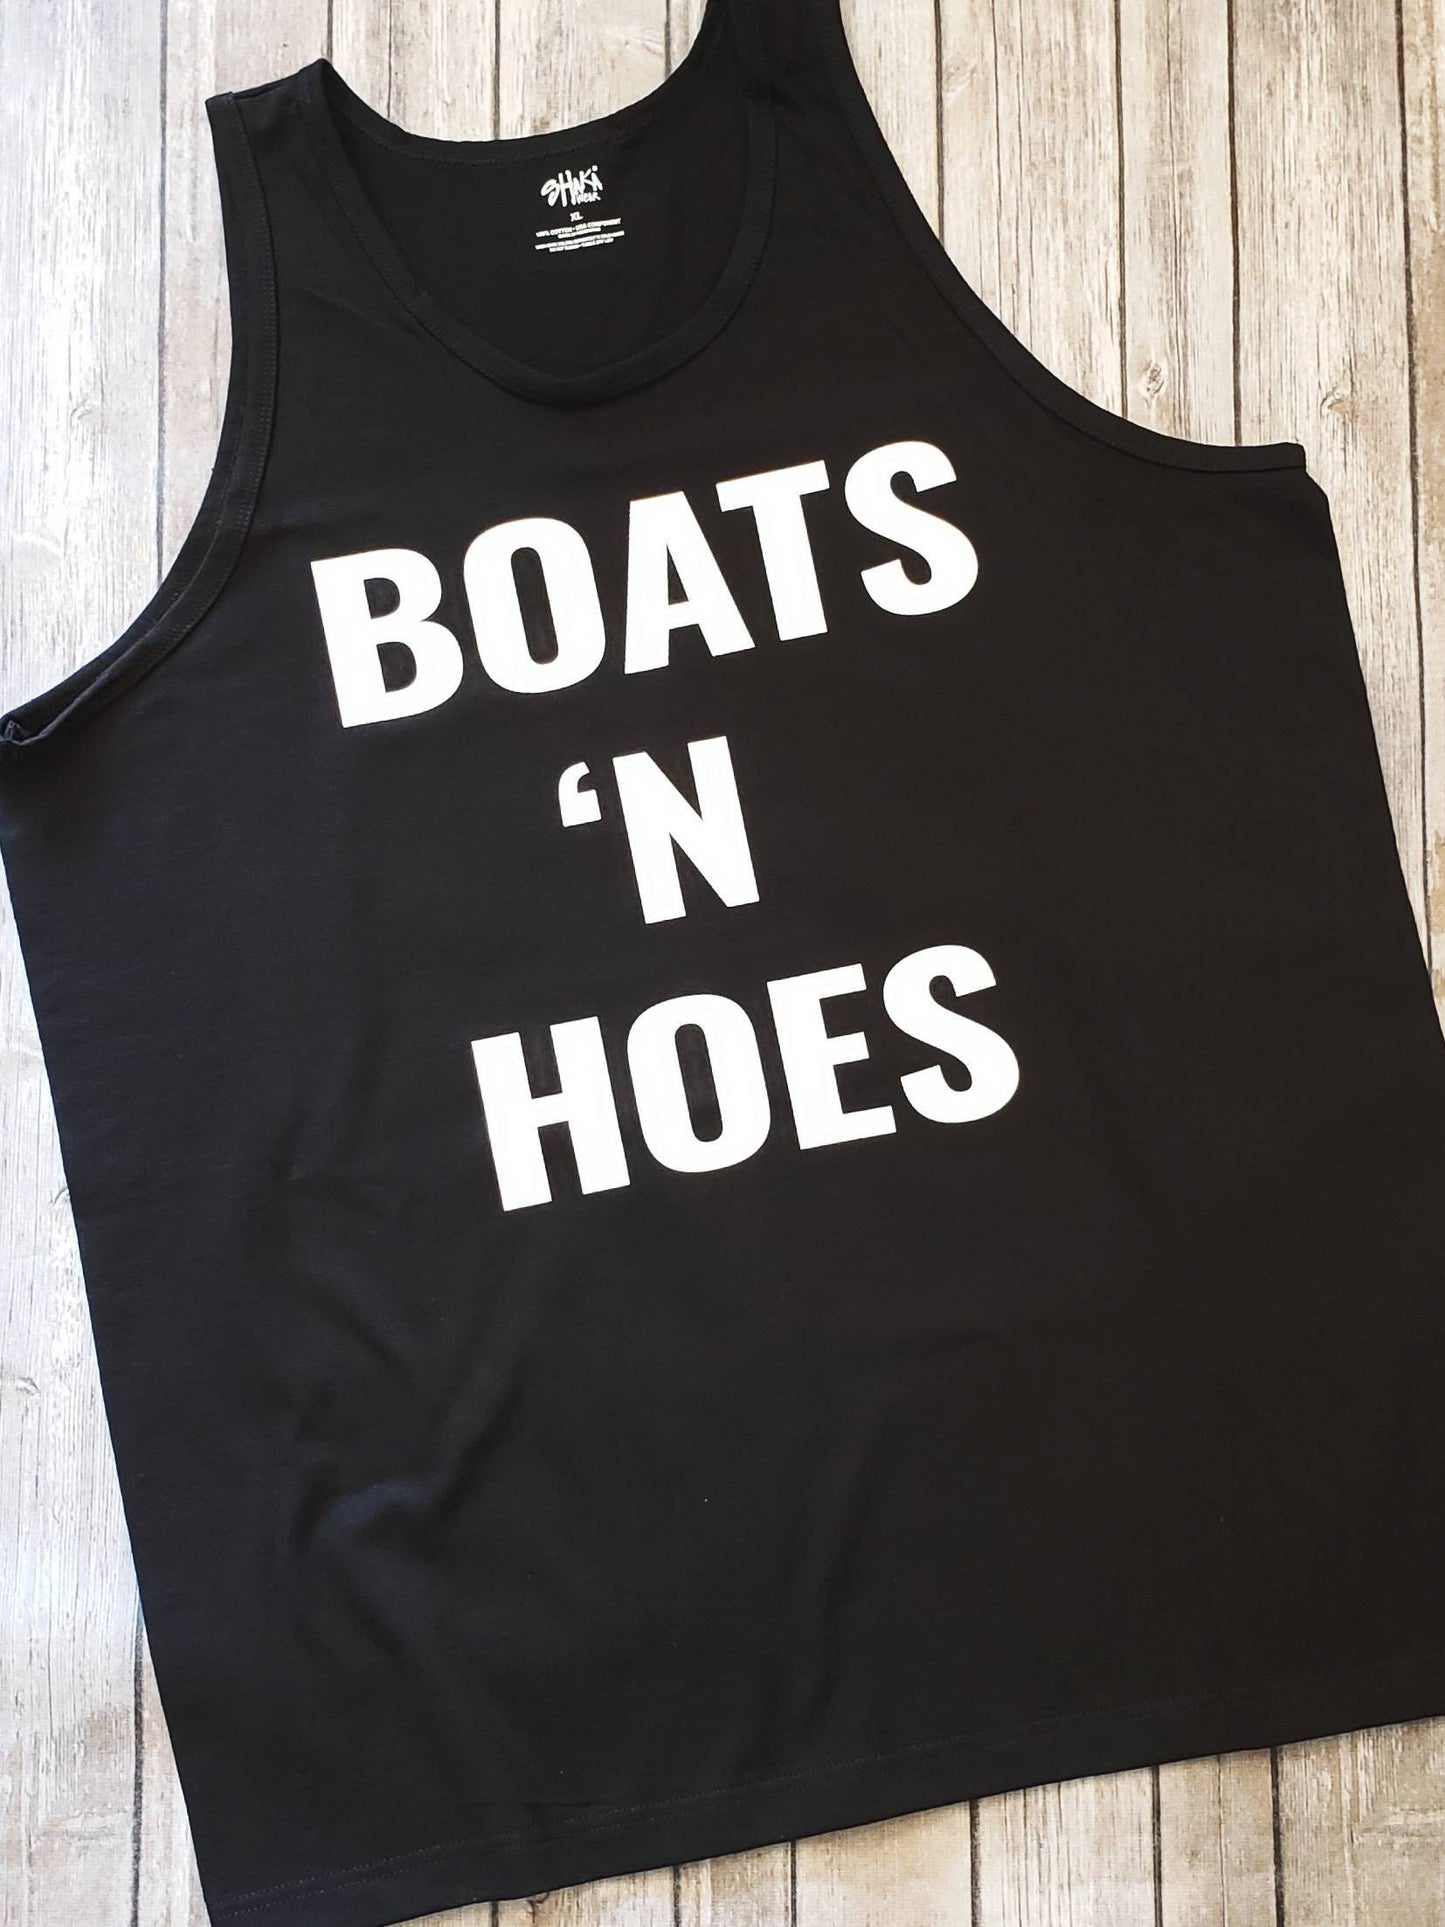 Boats N Hoes Men's Black Tank Top